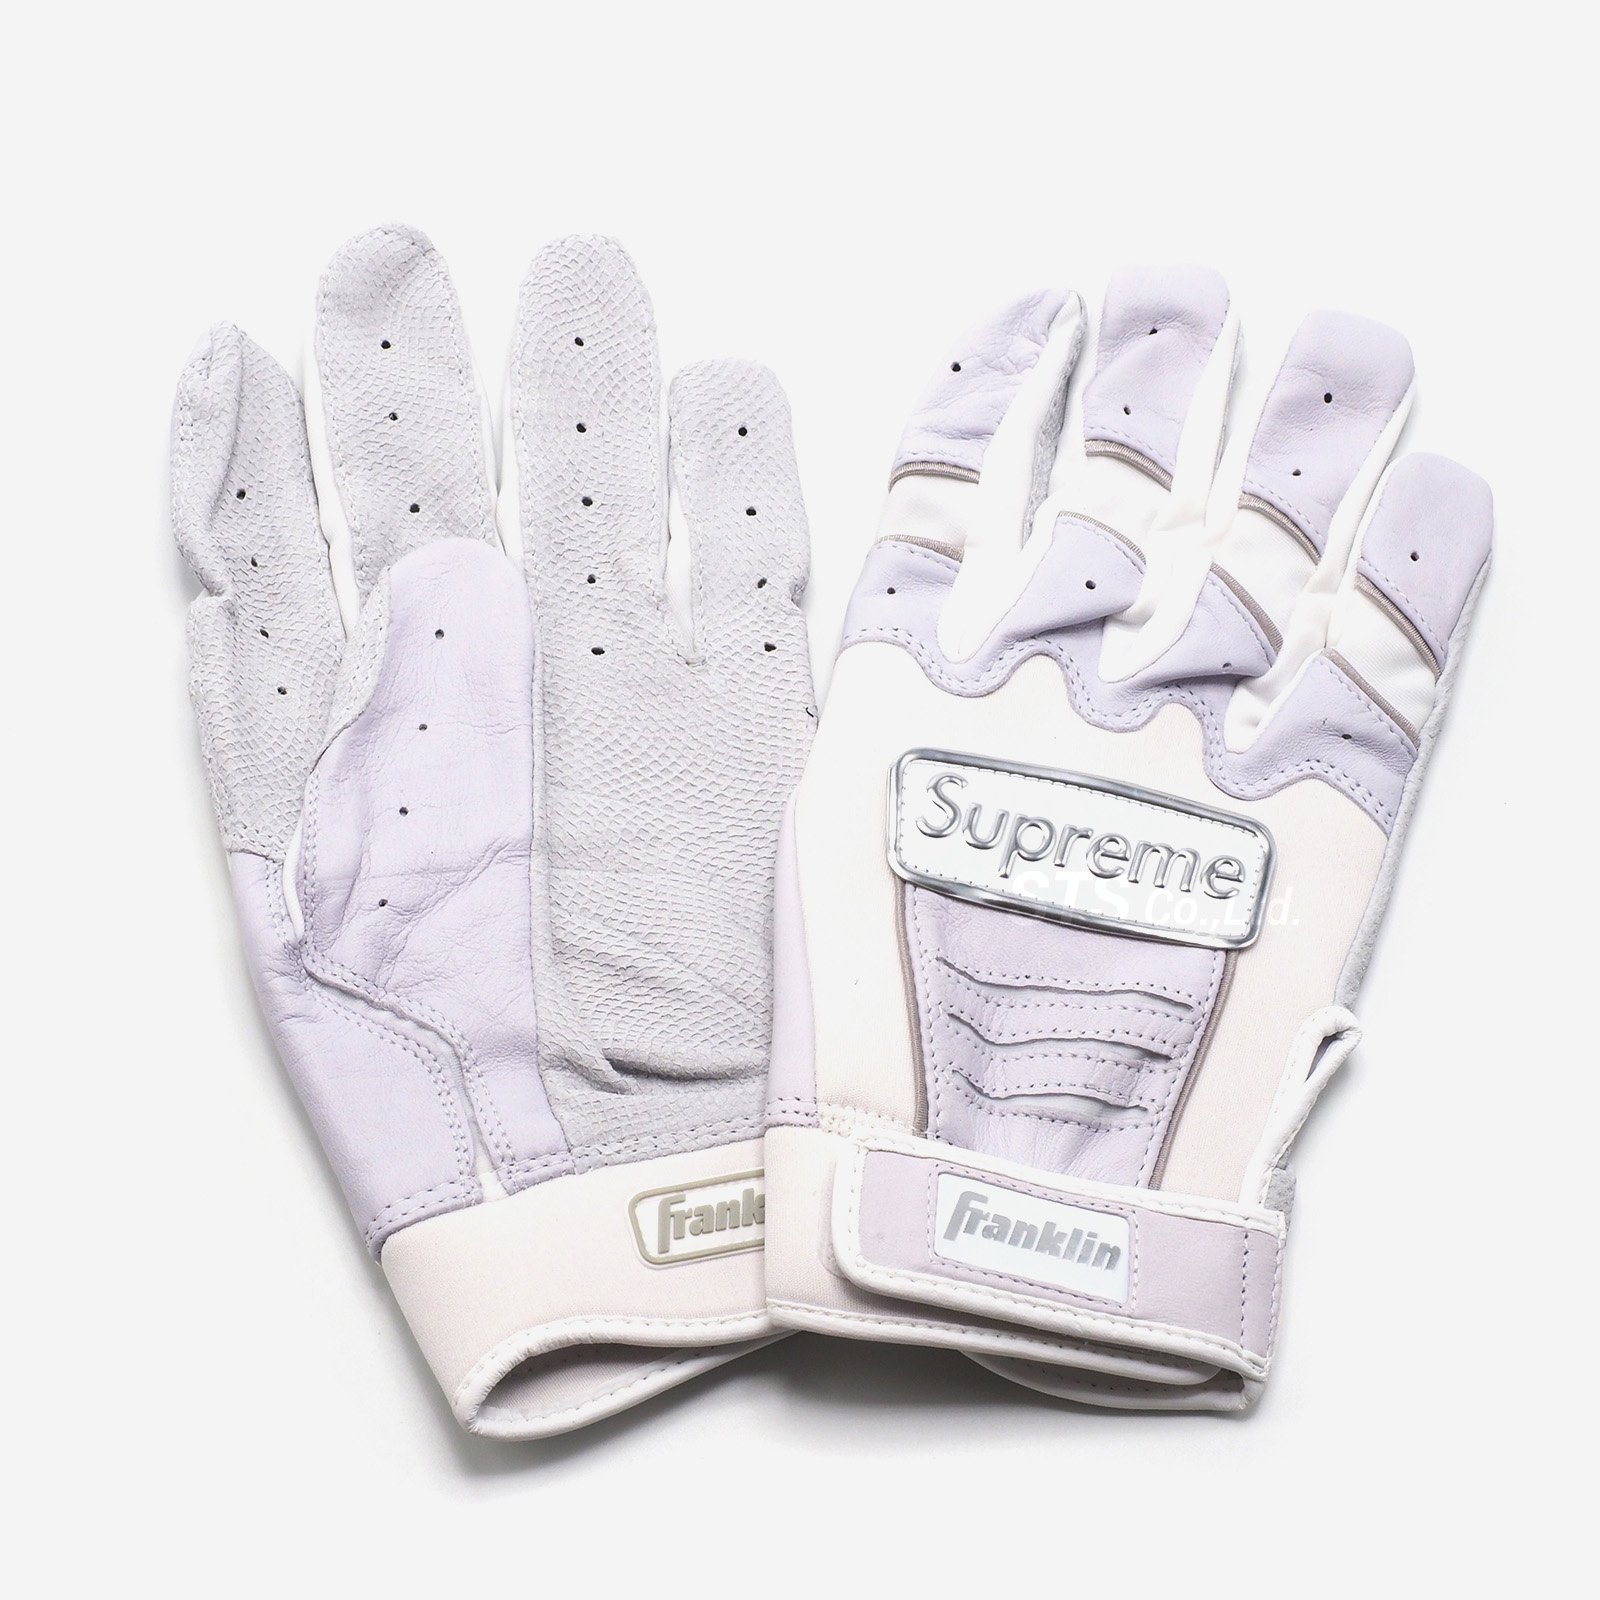 Supreme/Franklin CFX Pro Batting Glove - UG.SHAFT